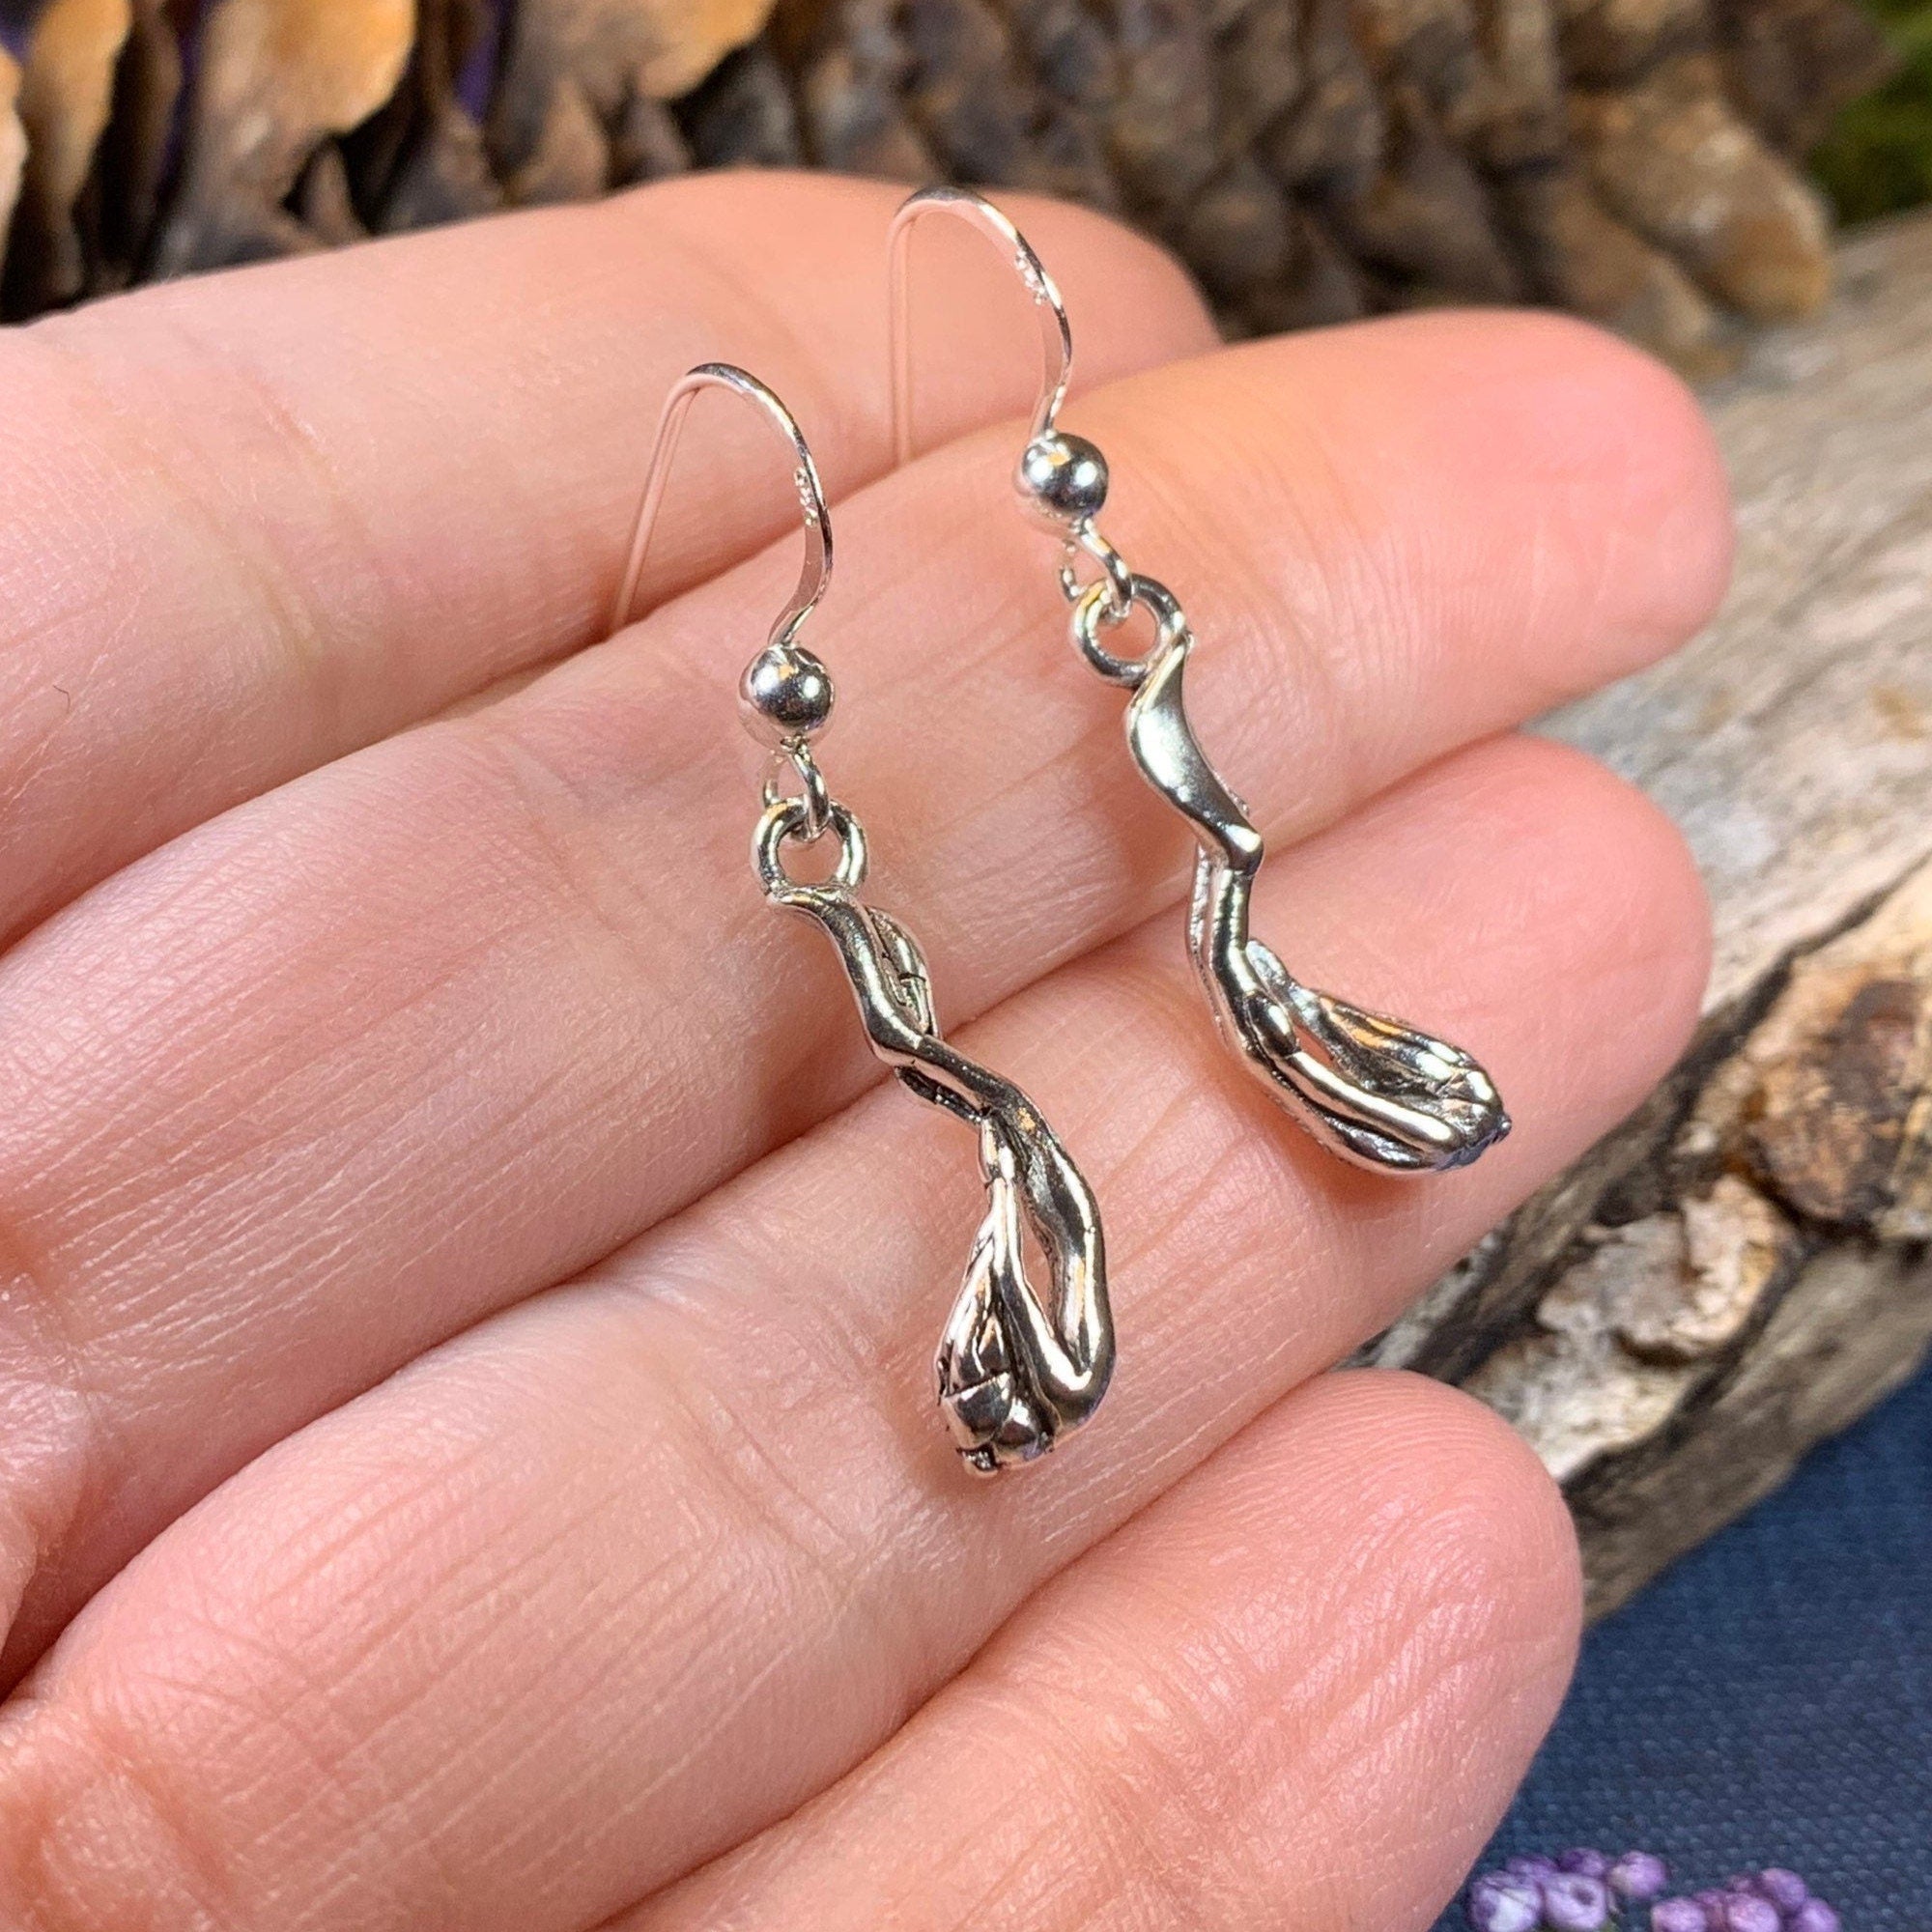 Silver Name Earring Minimalist Jewellery Gift for Mom Wife - Etsy in 2023 |  Name earrings, Minimalist earrings, Minimalist jewelry silver